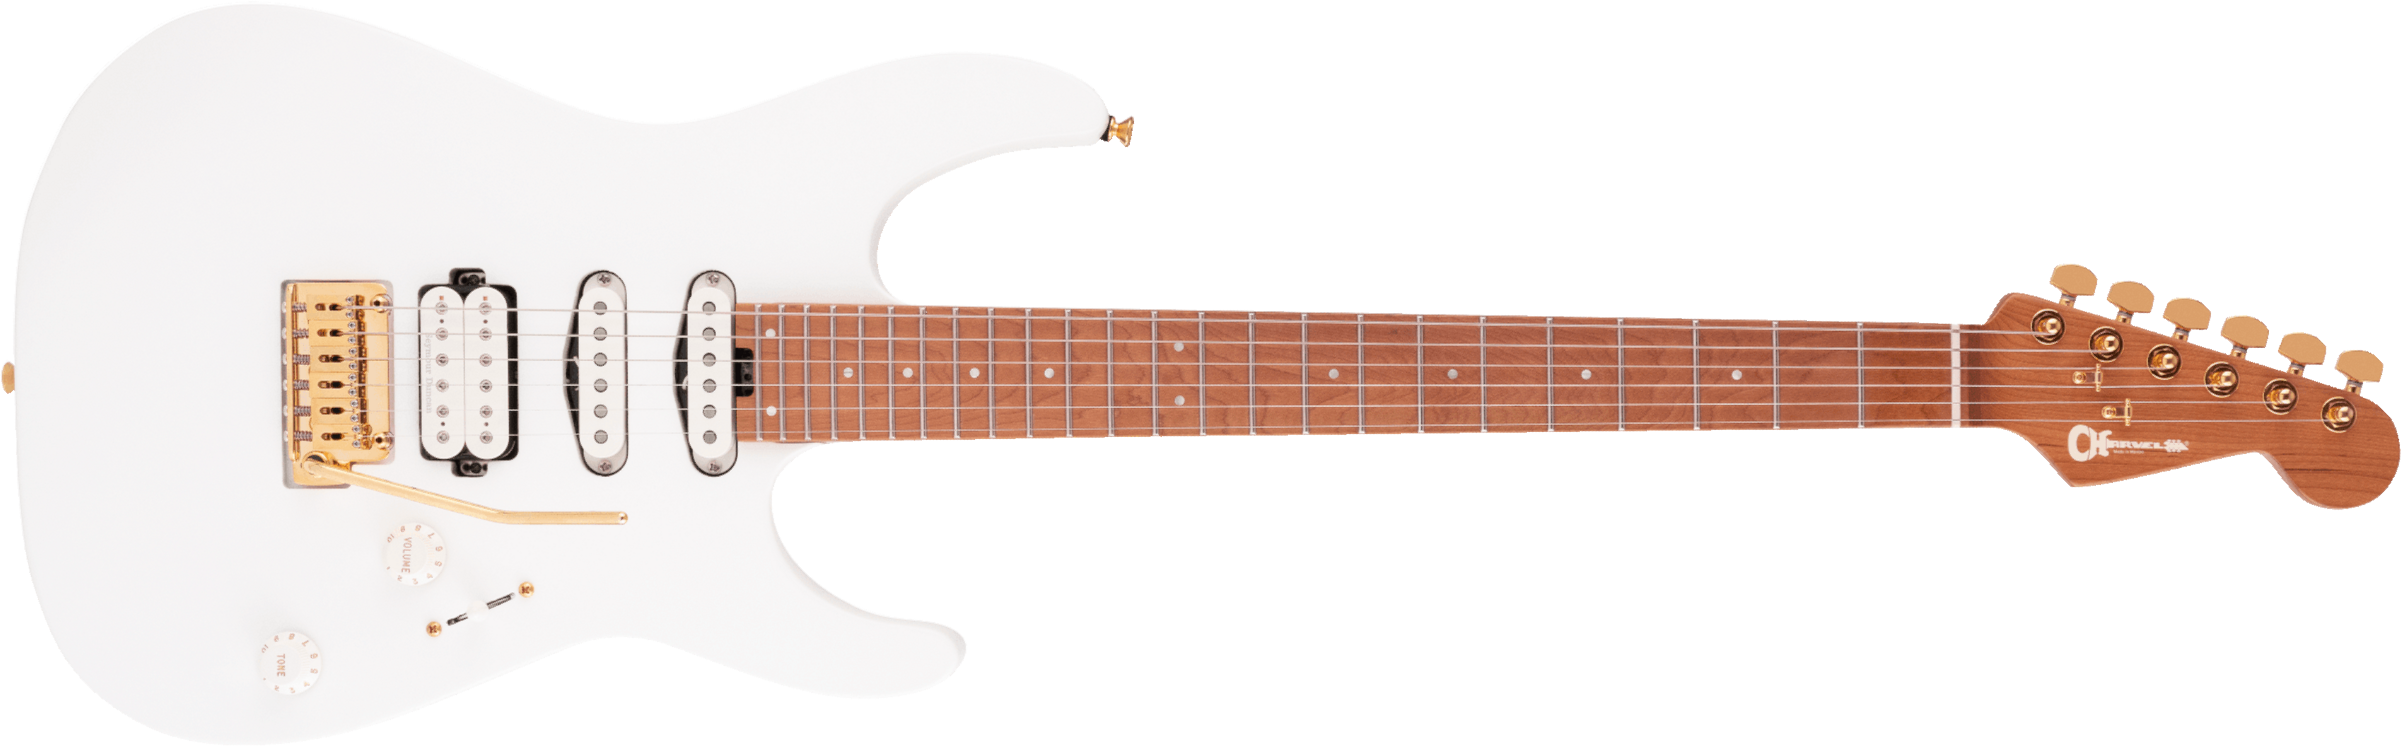 Charvel Dinky Dk24 Hss 2pt Cm Pro-mod Seymour Duncan Trem Mn - Snow White - Elektrische gitaar in Str-vorm - Main picture